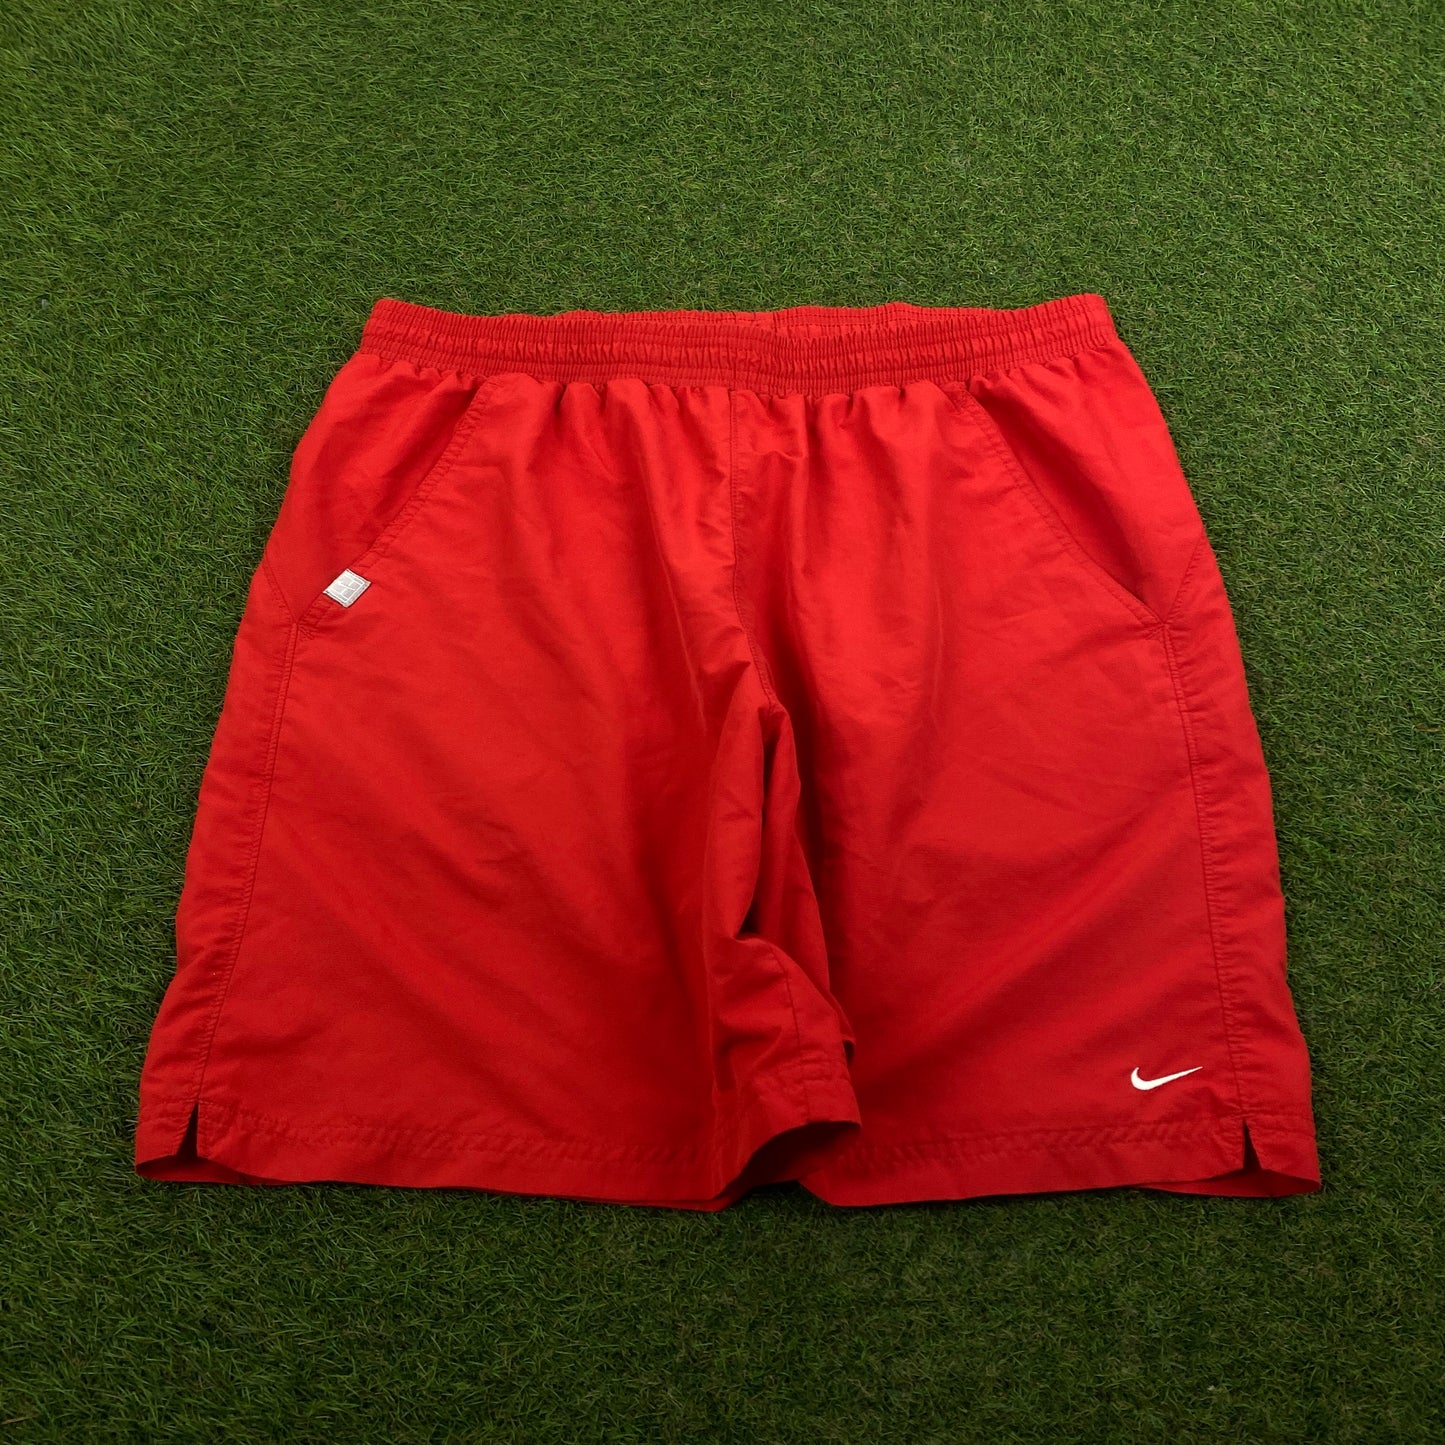 00s Nike Tennis Shorts Red Medium